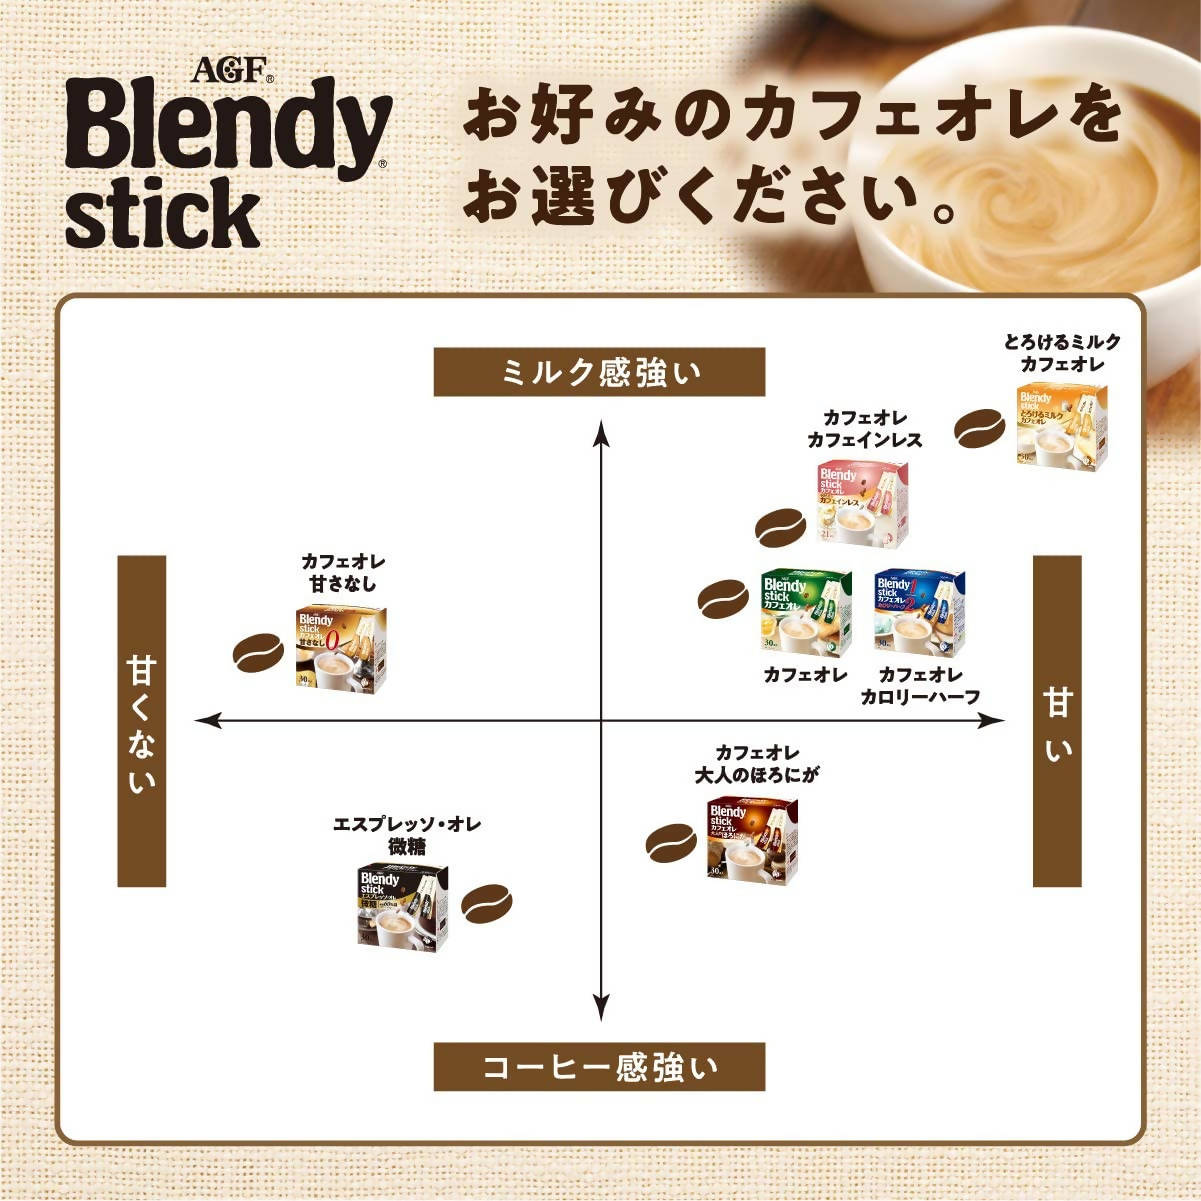 (AGF) Blendy Stick Cafe Au Lait (Original) Instant Coffee 27 sticks